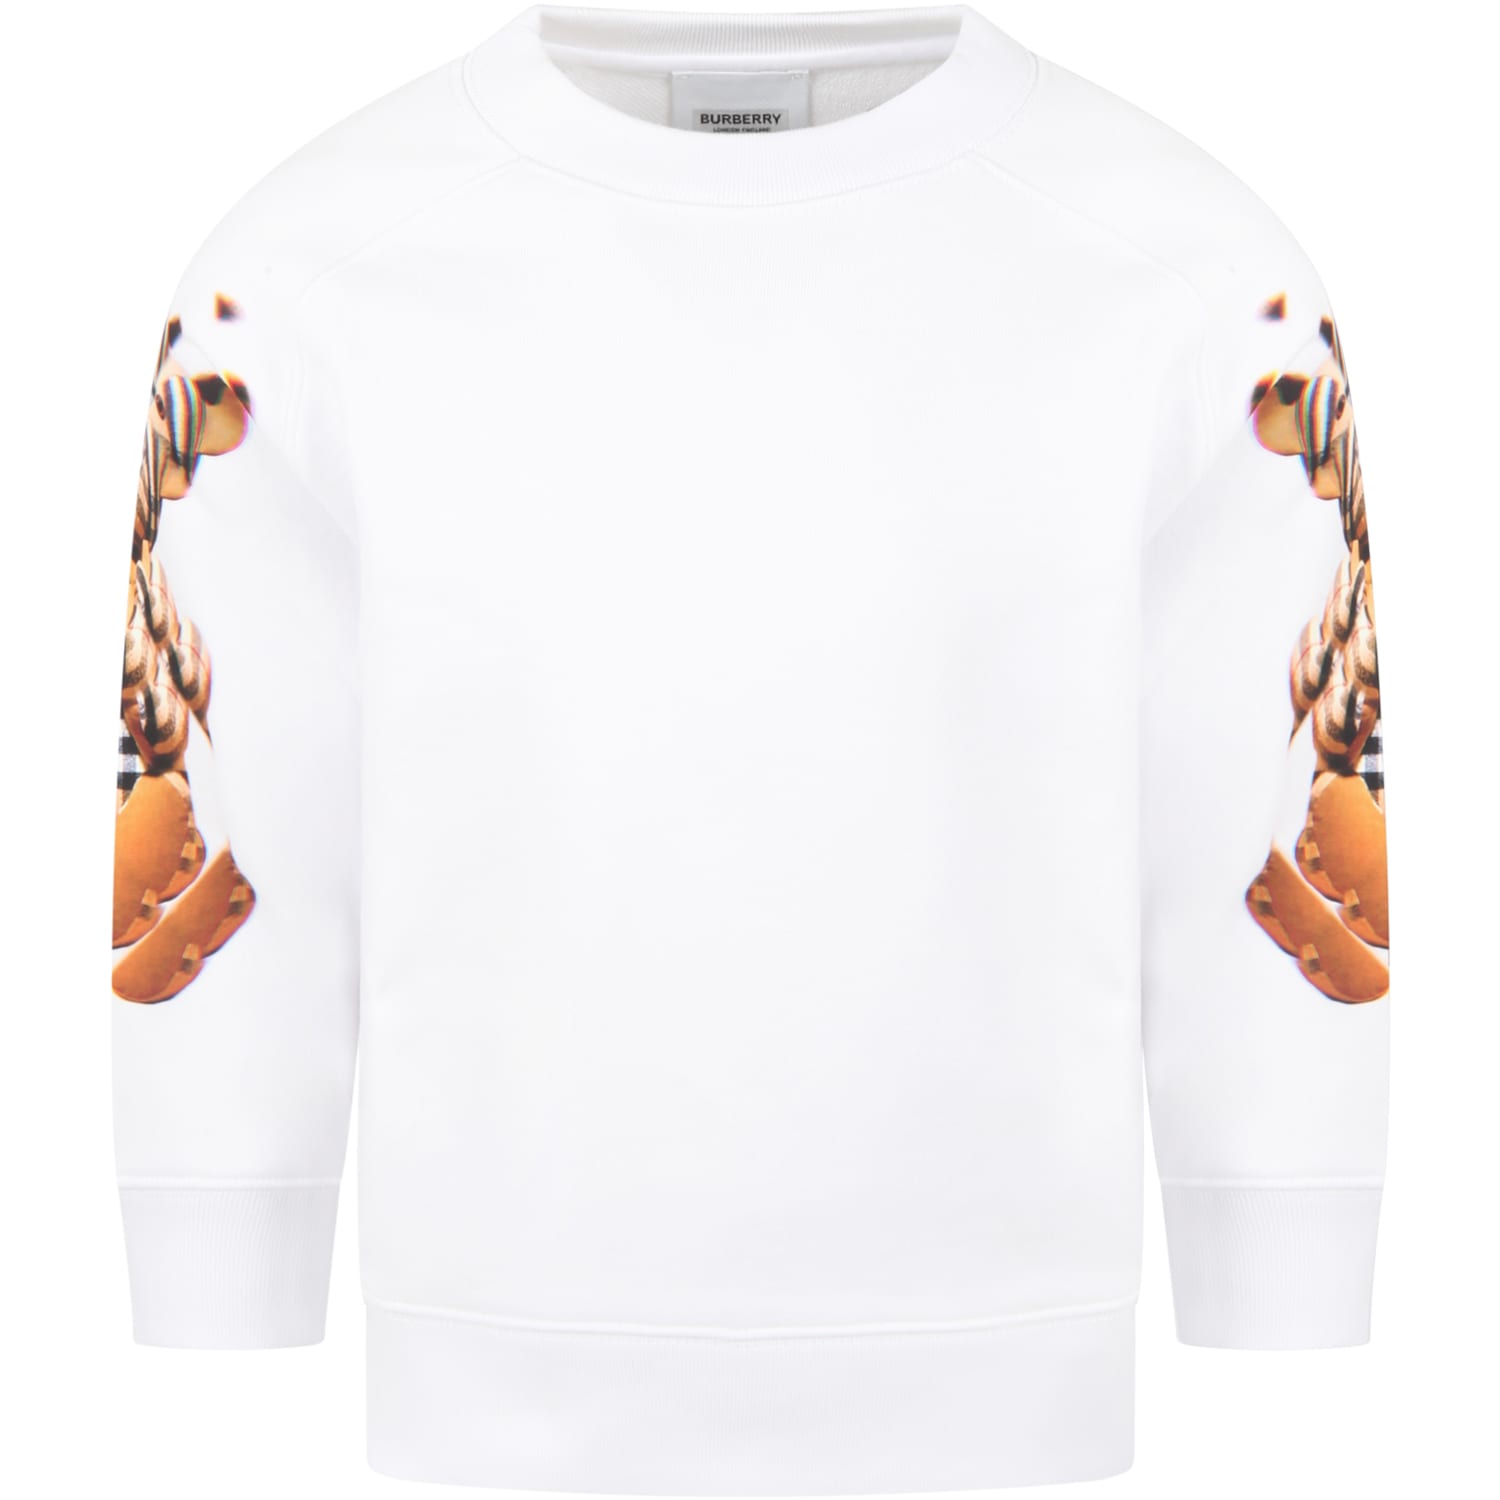 Burberry White Sweatshirt For Kids With Bears